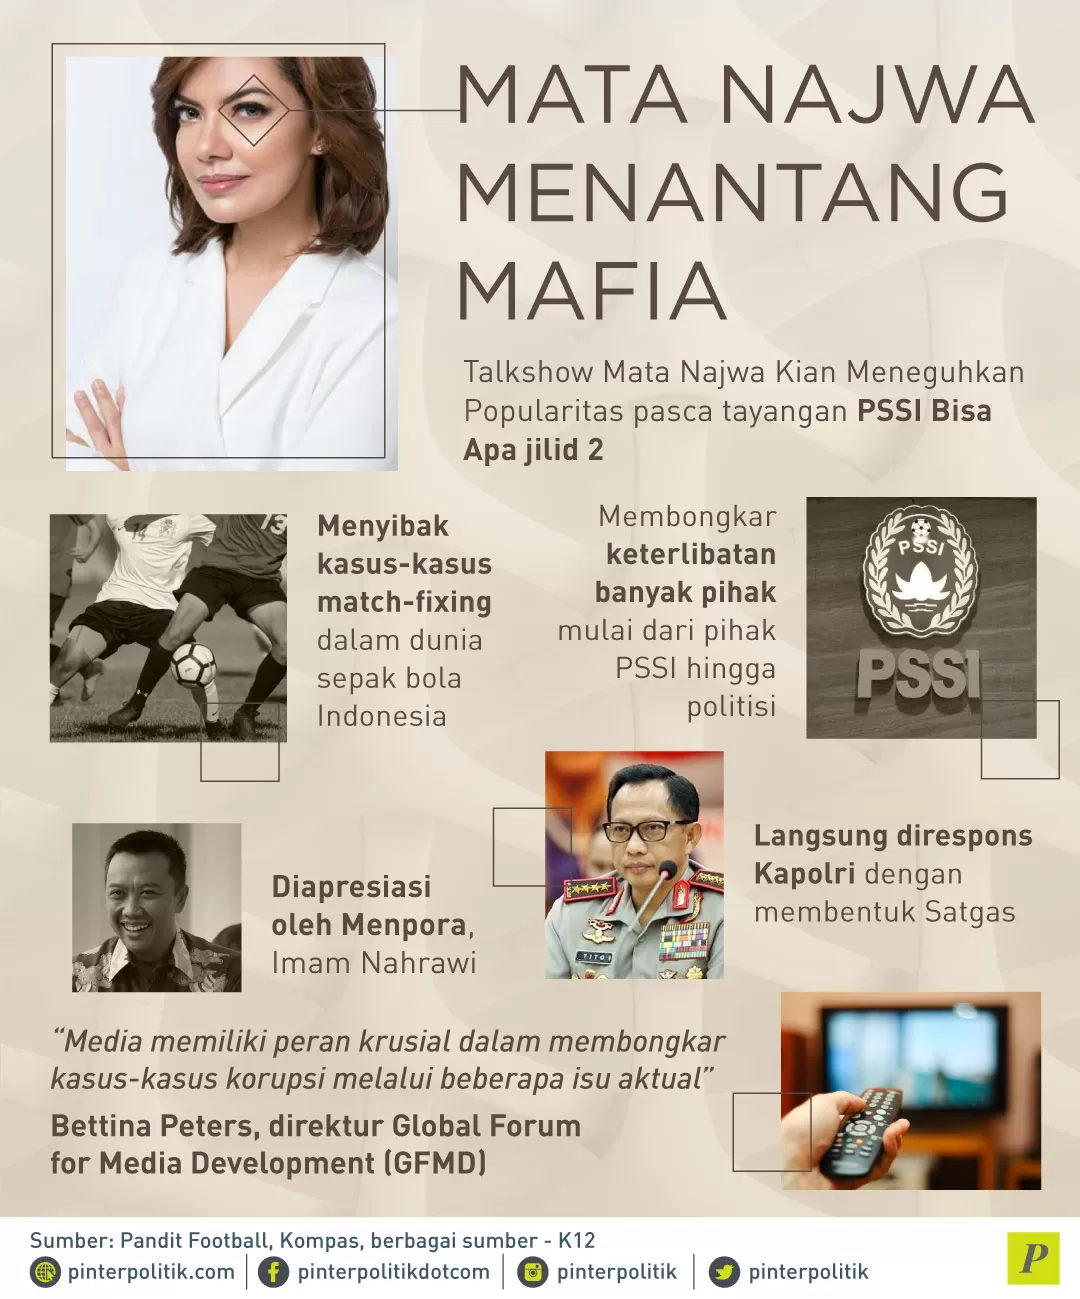 Mata Najwa Menantang Mafia